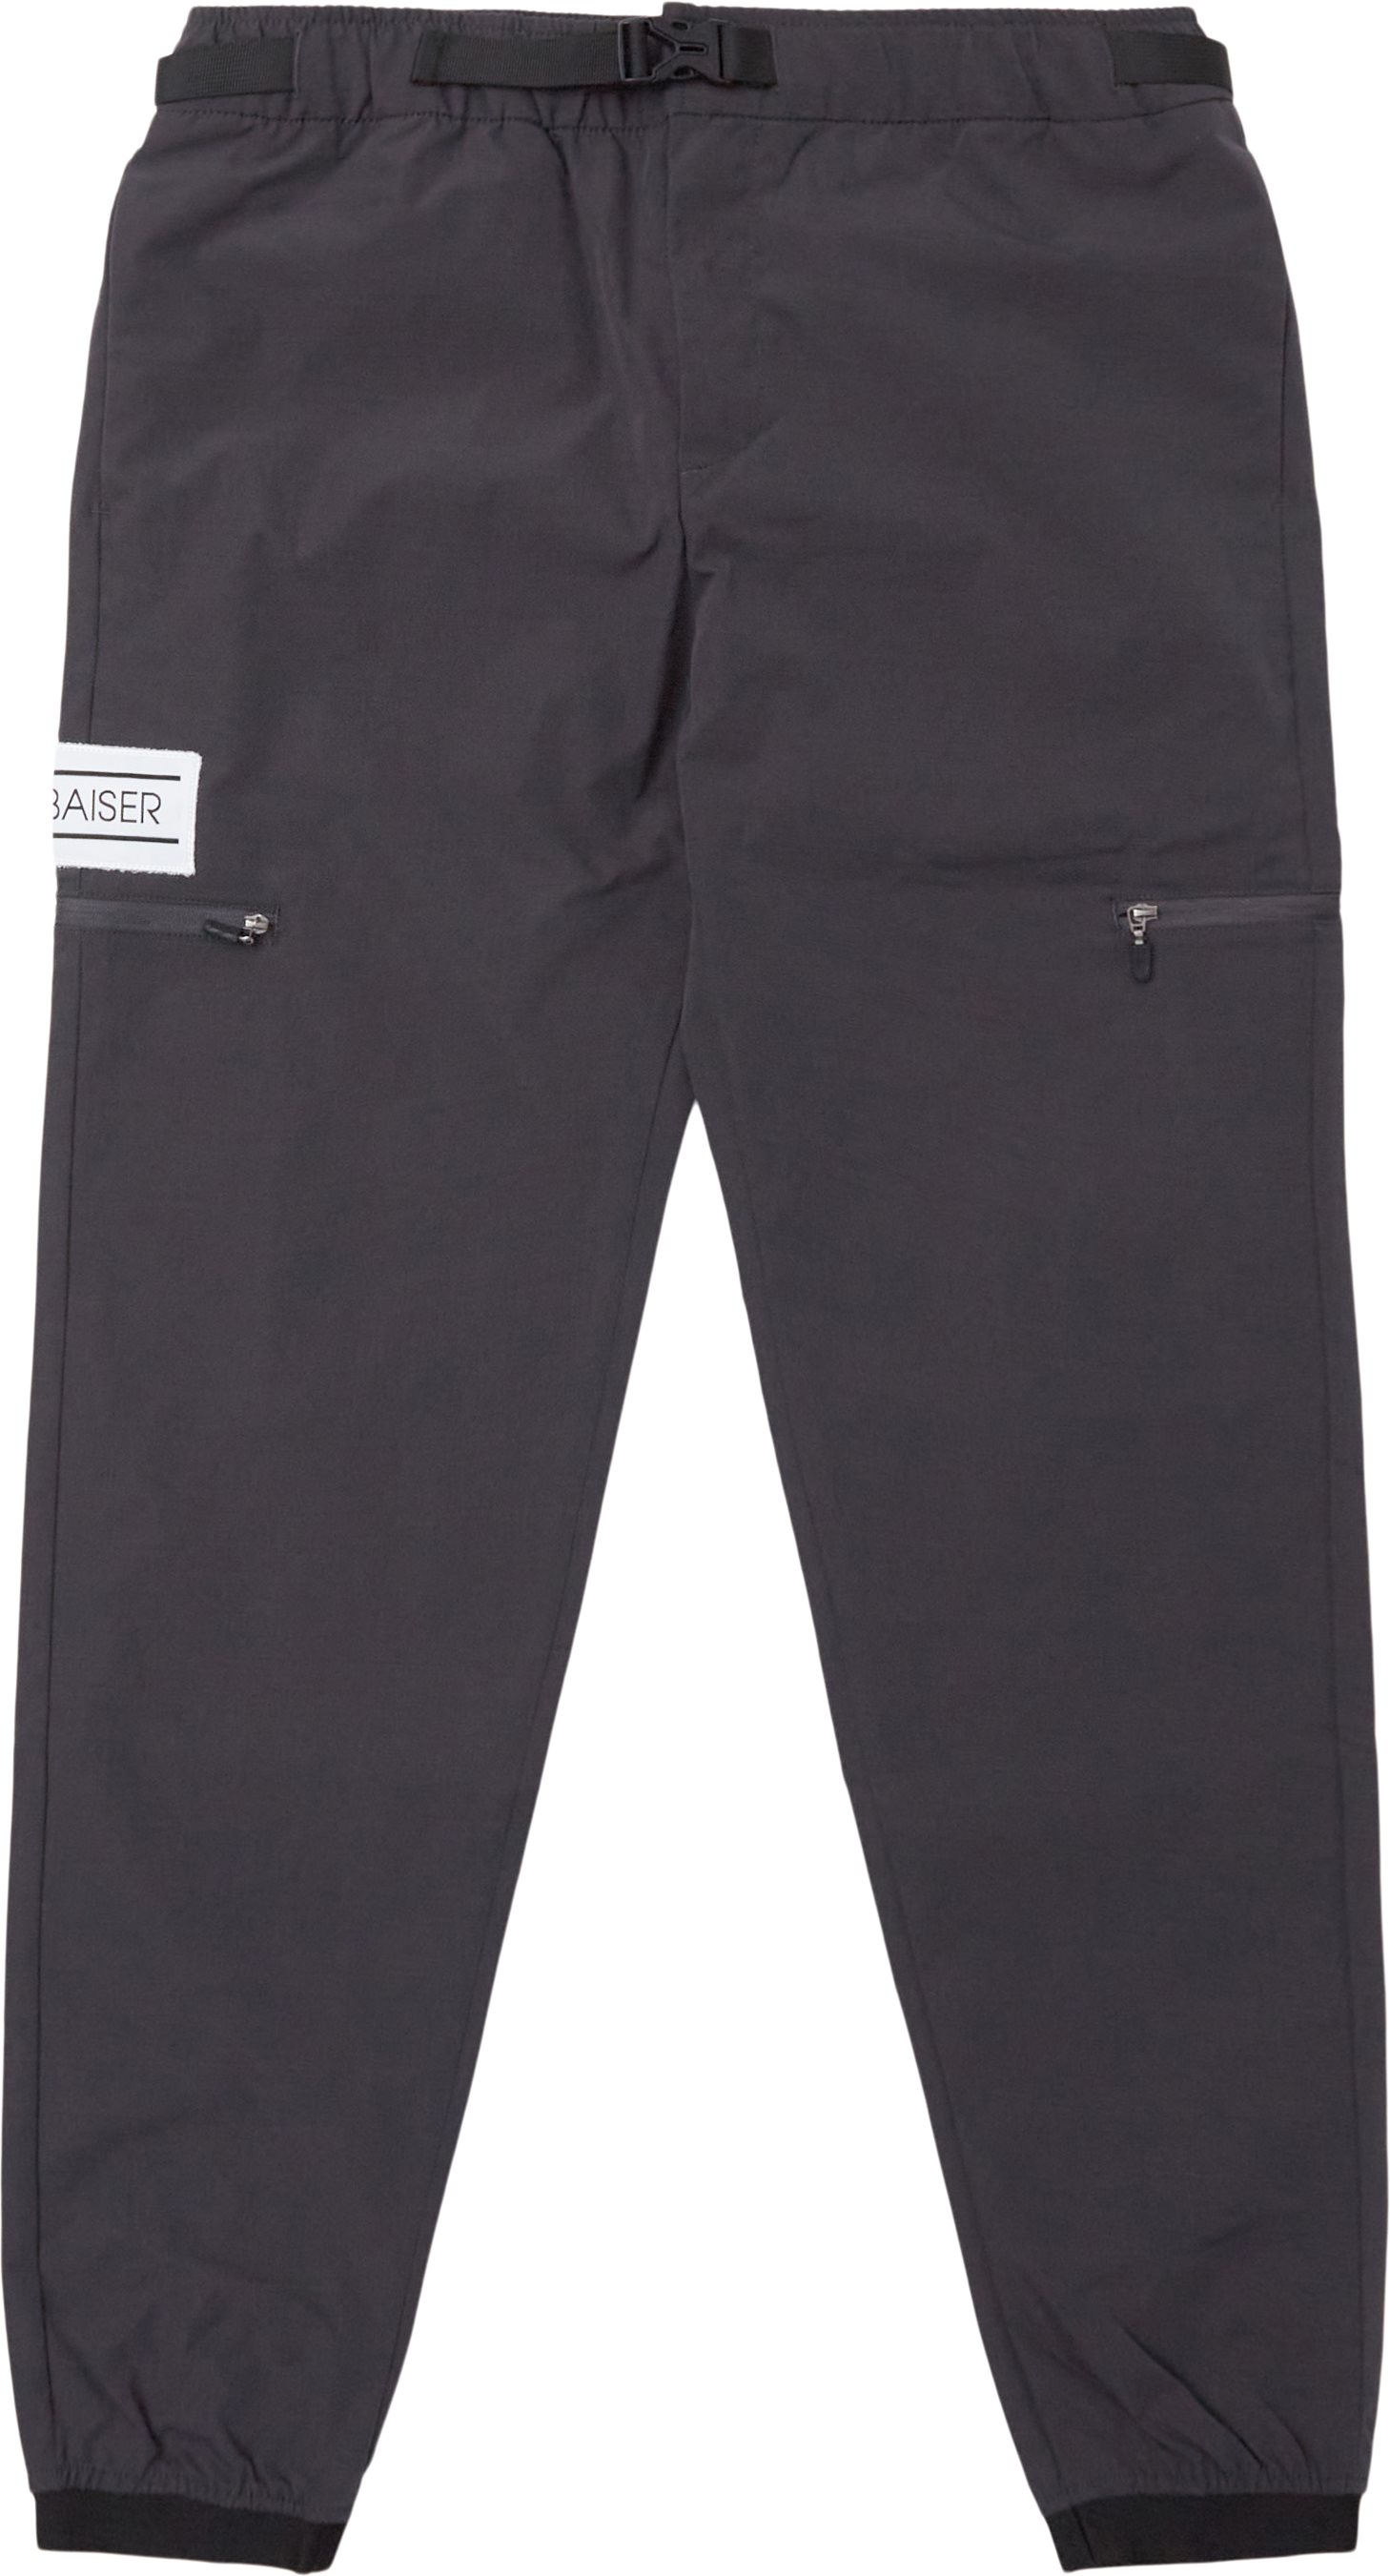 Normandy Pants - Regular fit - Grey